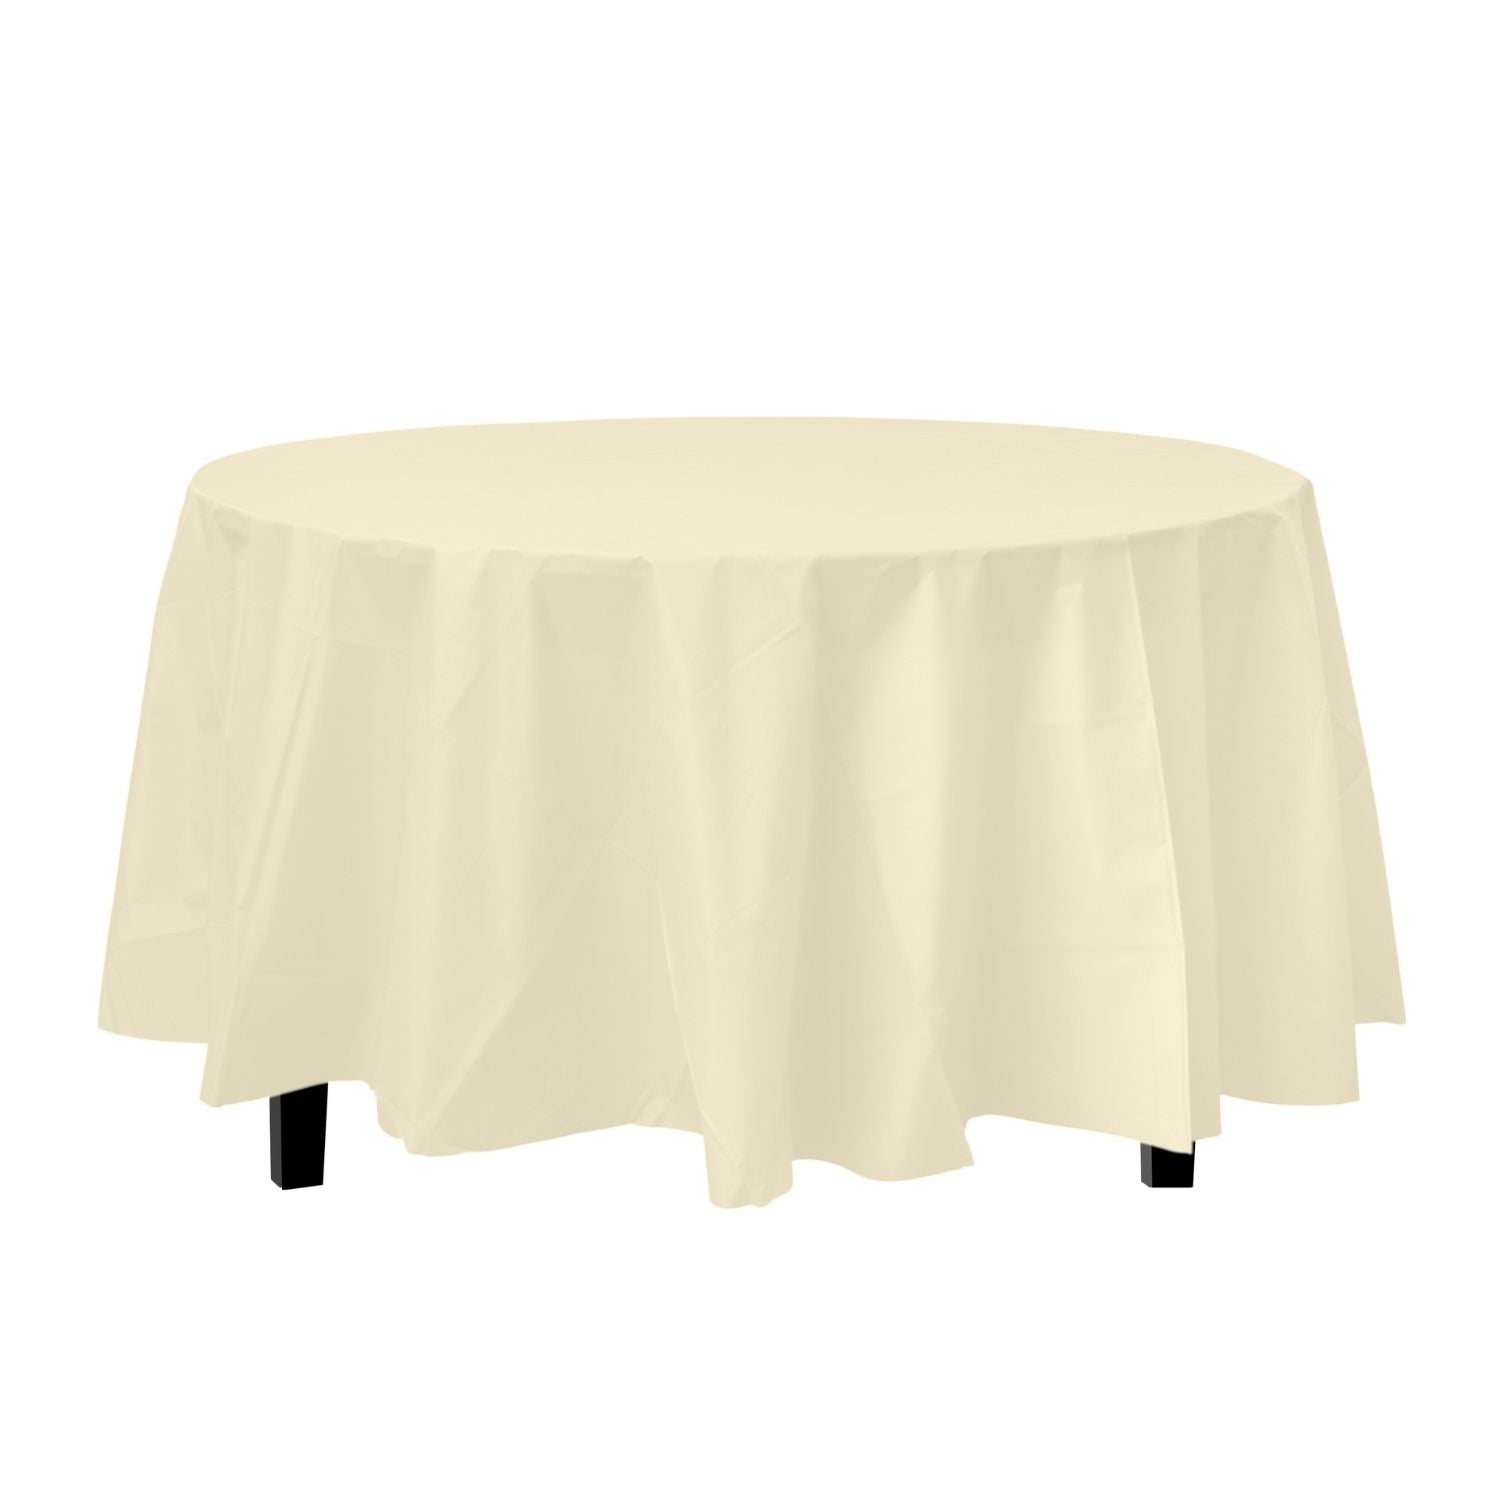 Premium Round Ivory Plastic Tablecloth | 96 Count - Yom Tov Settings